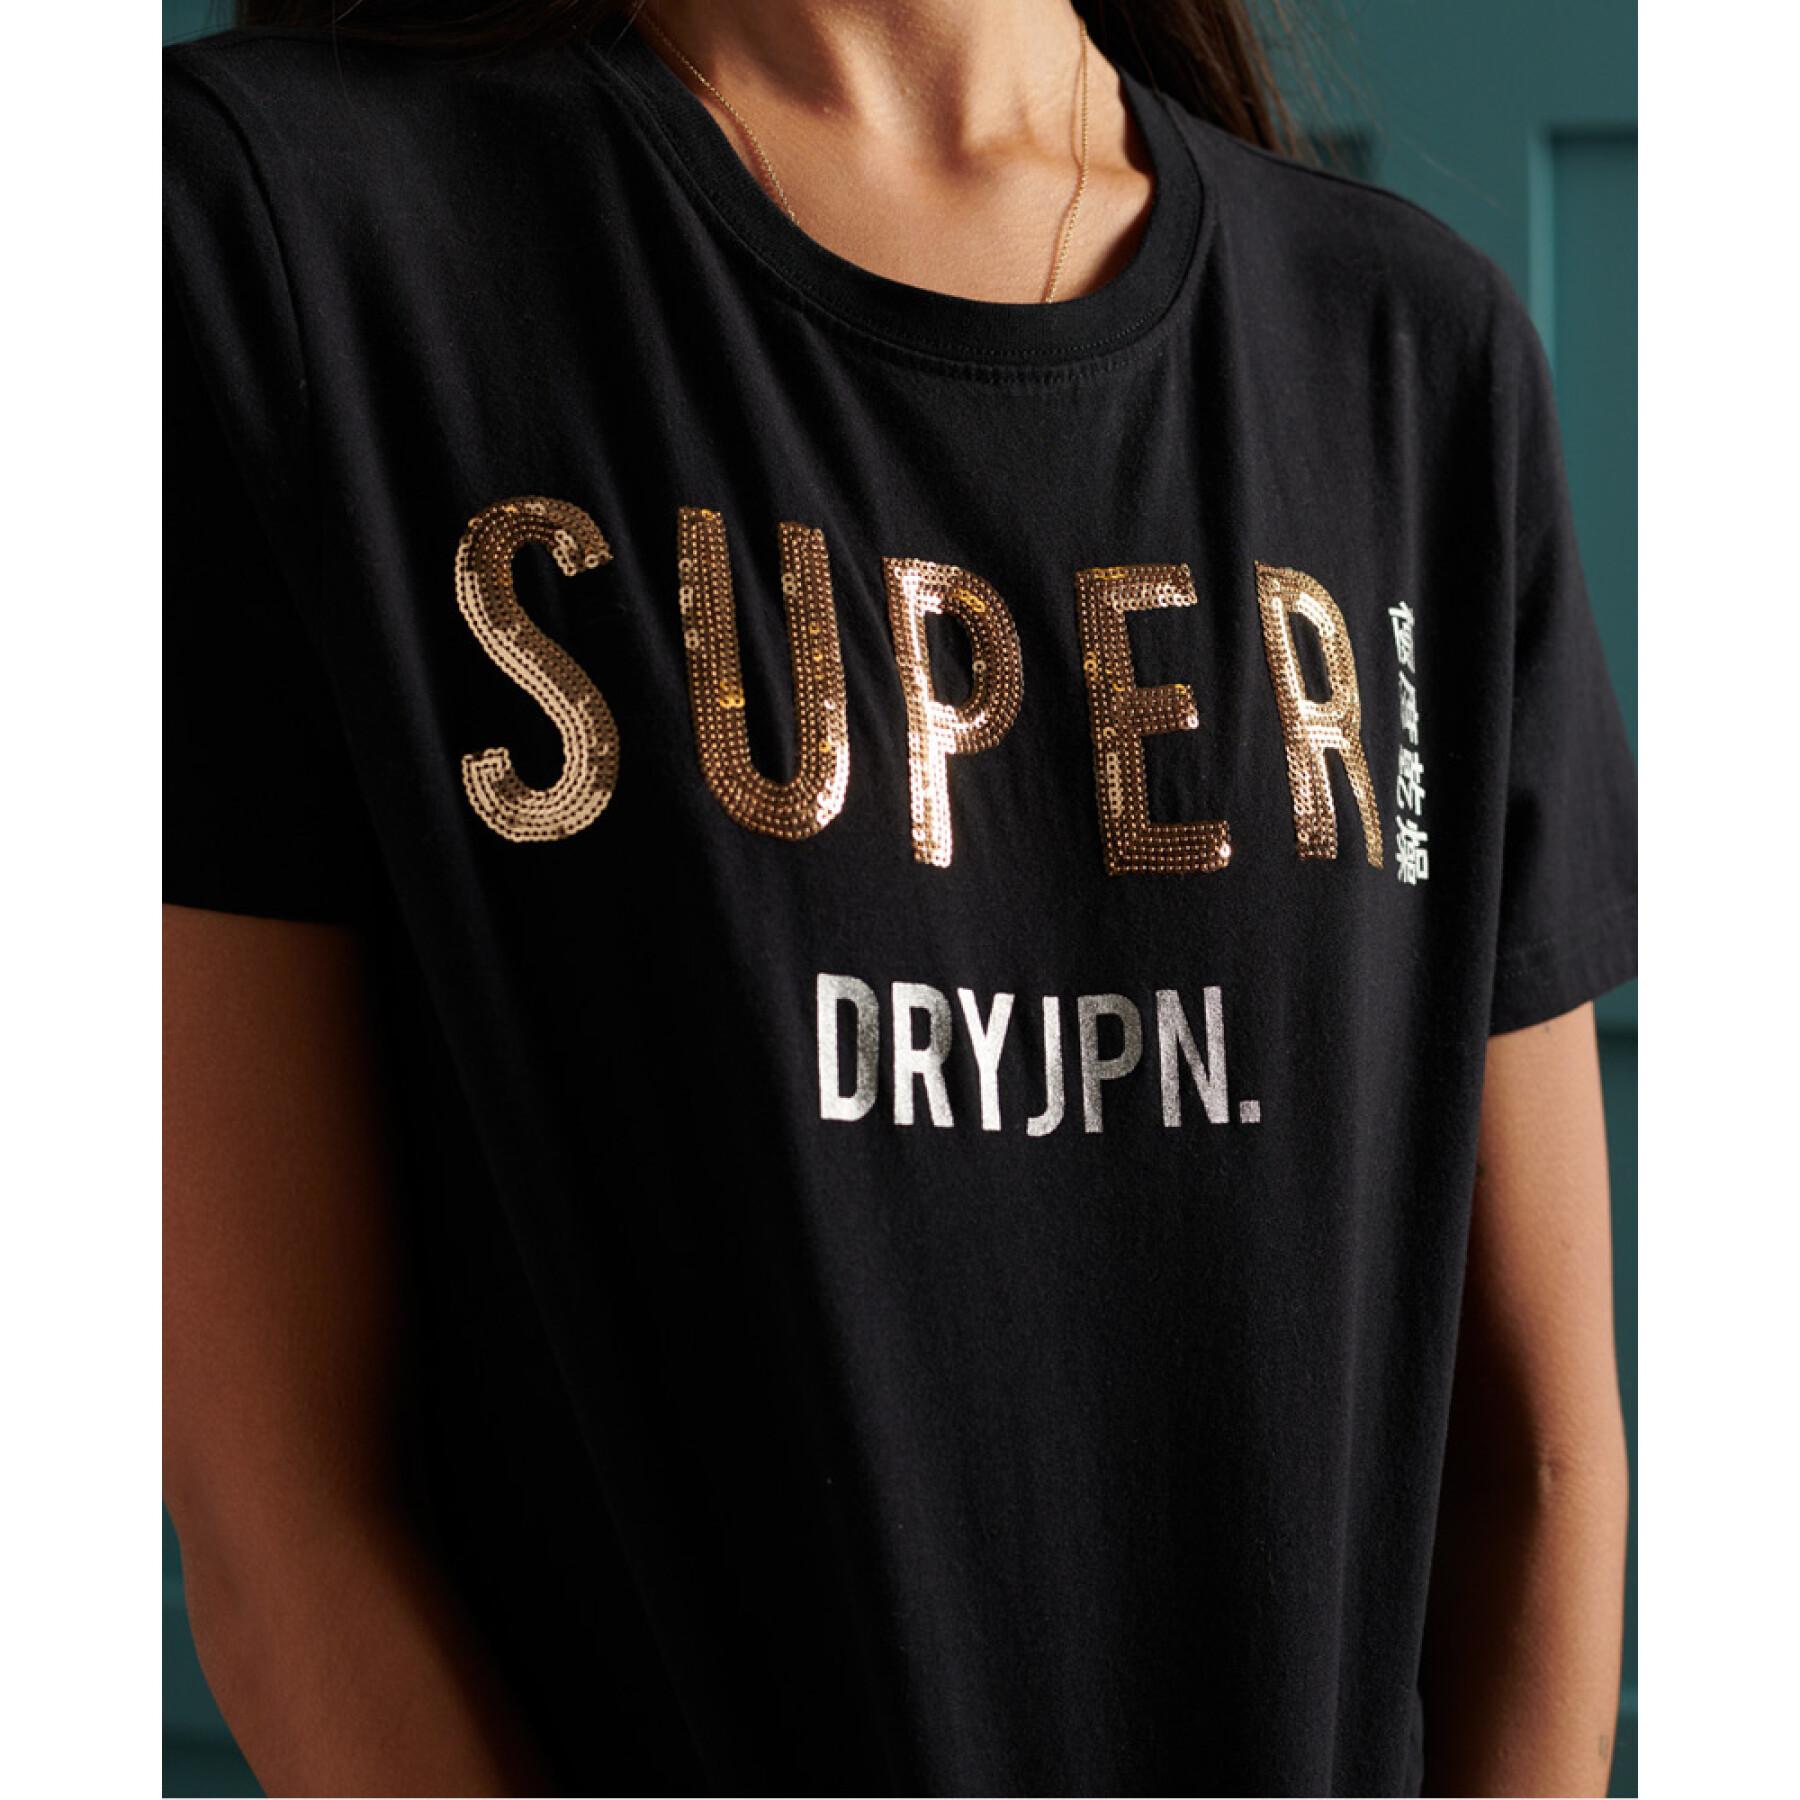 Women's T-shirt Superdry Super Japan